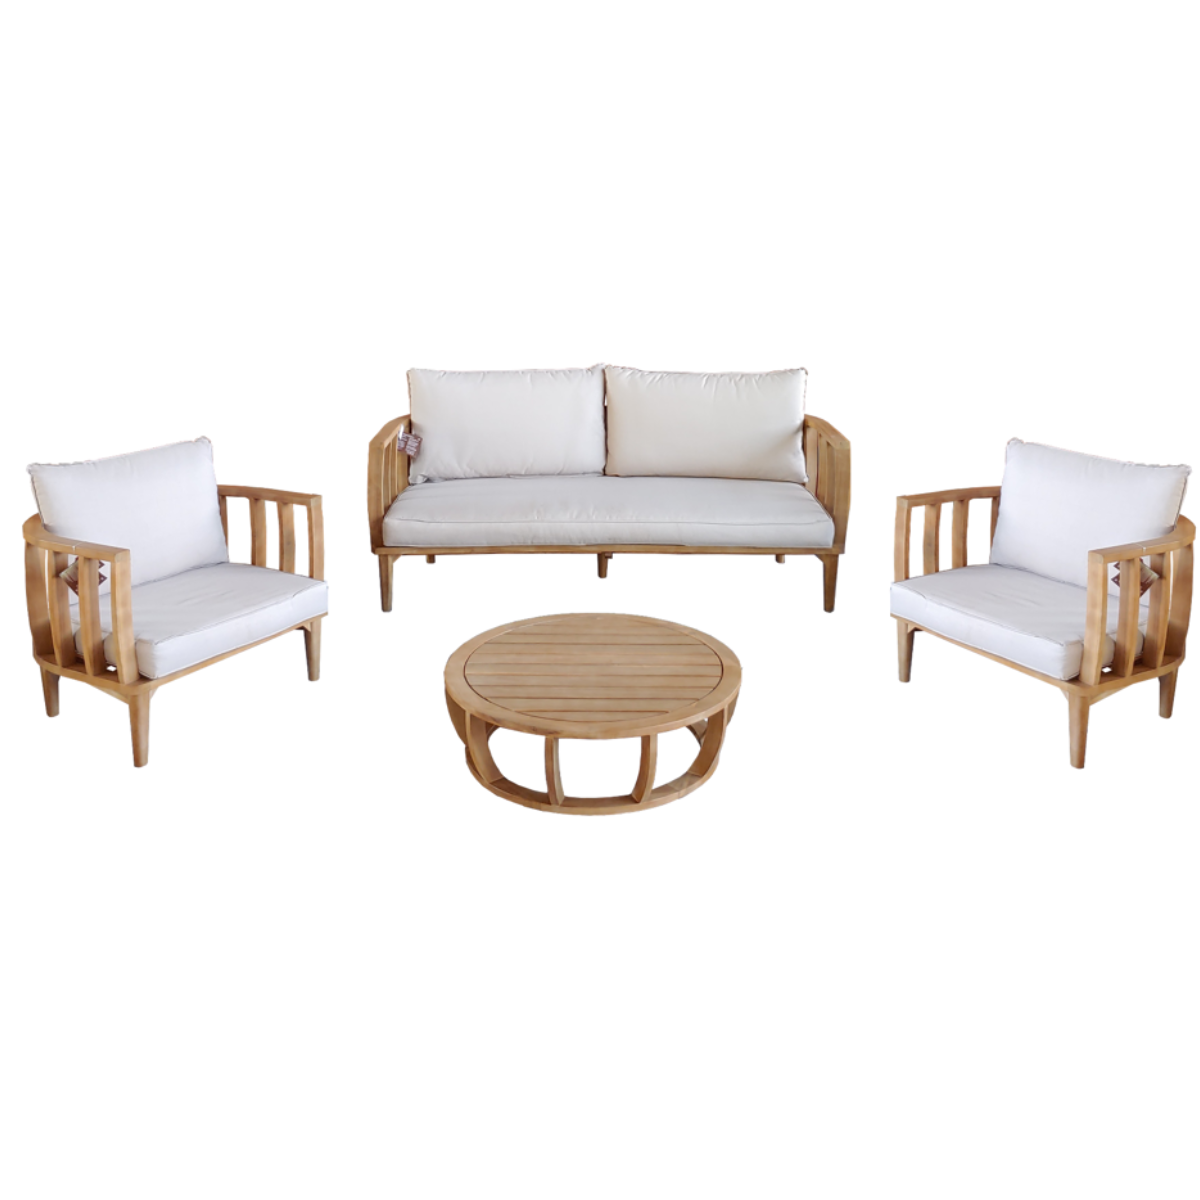 Nancy's Mataro Lounge Set - Lounge Furniture - 4-piece Lounge Set - Acacia wood